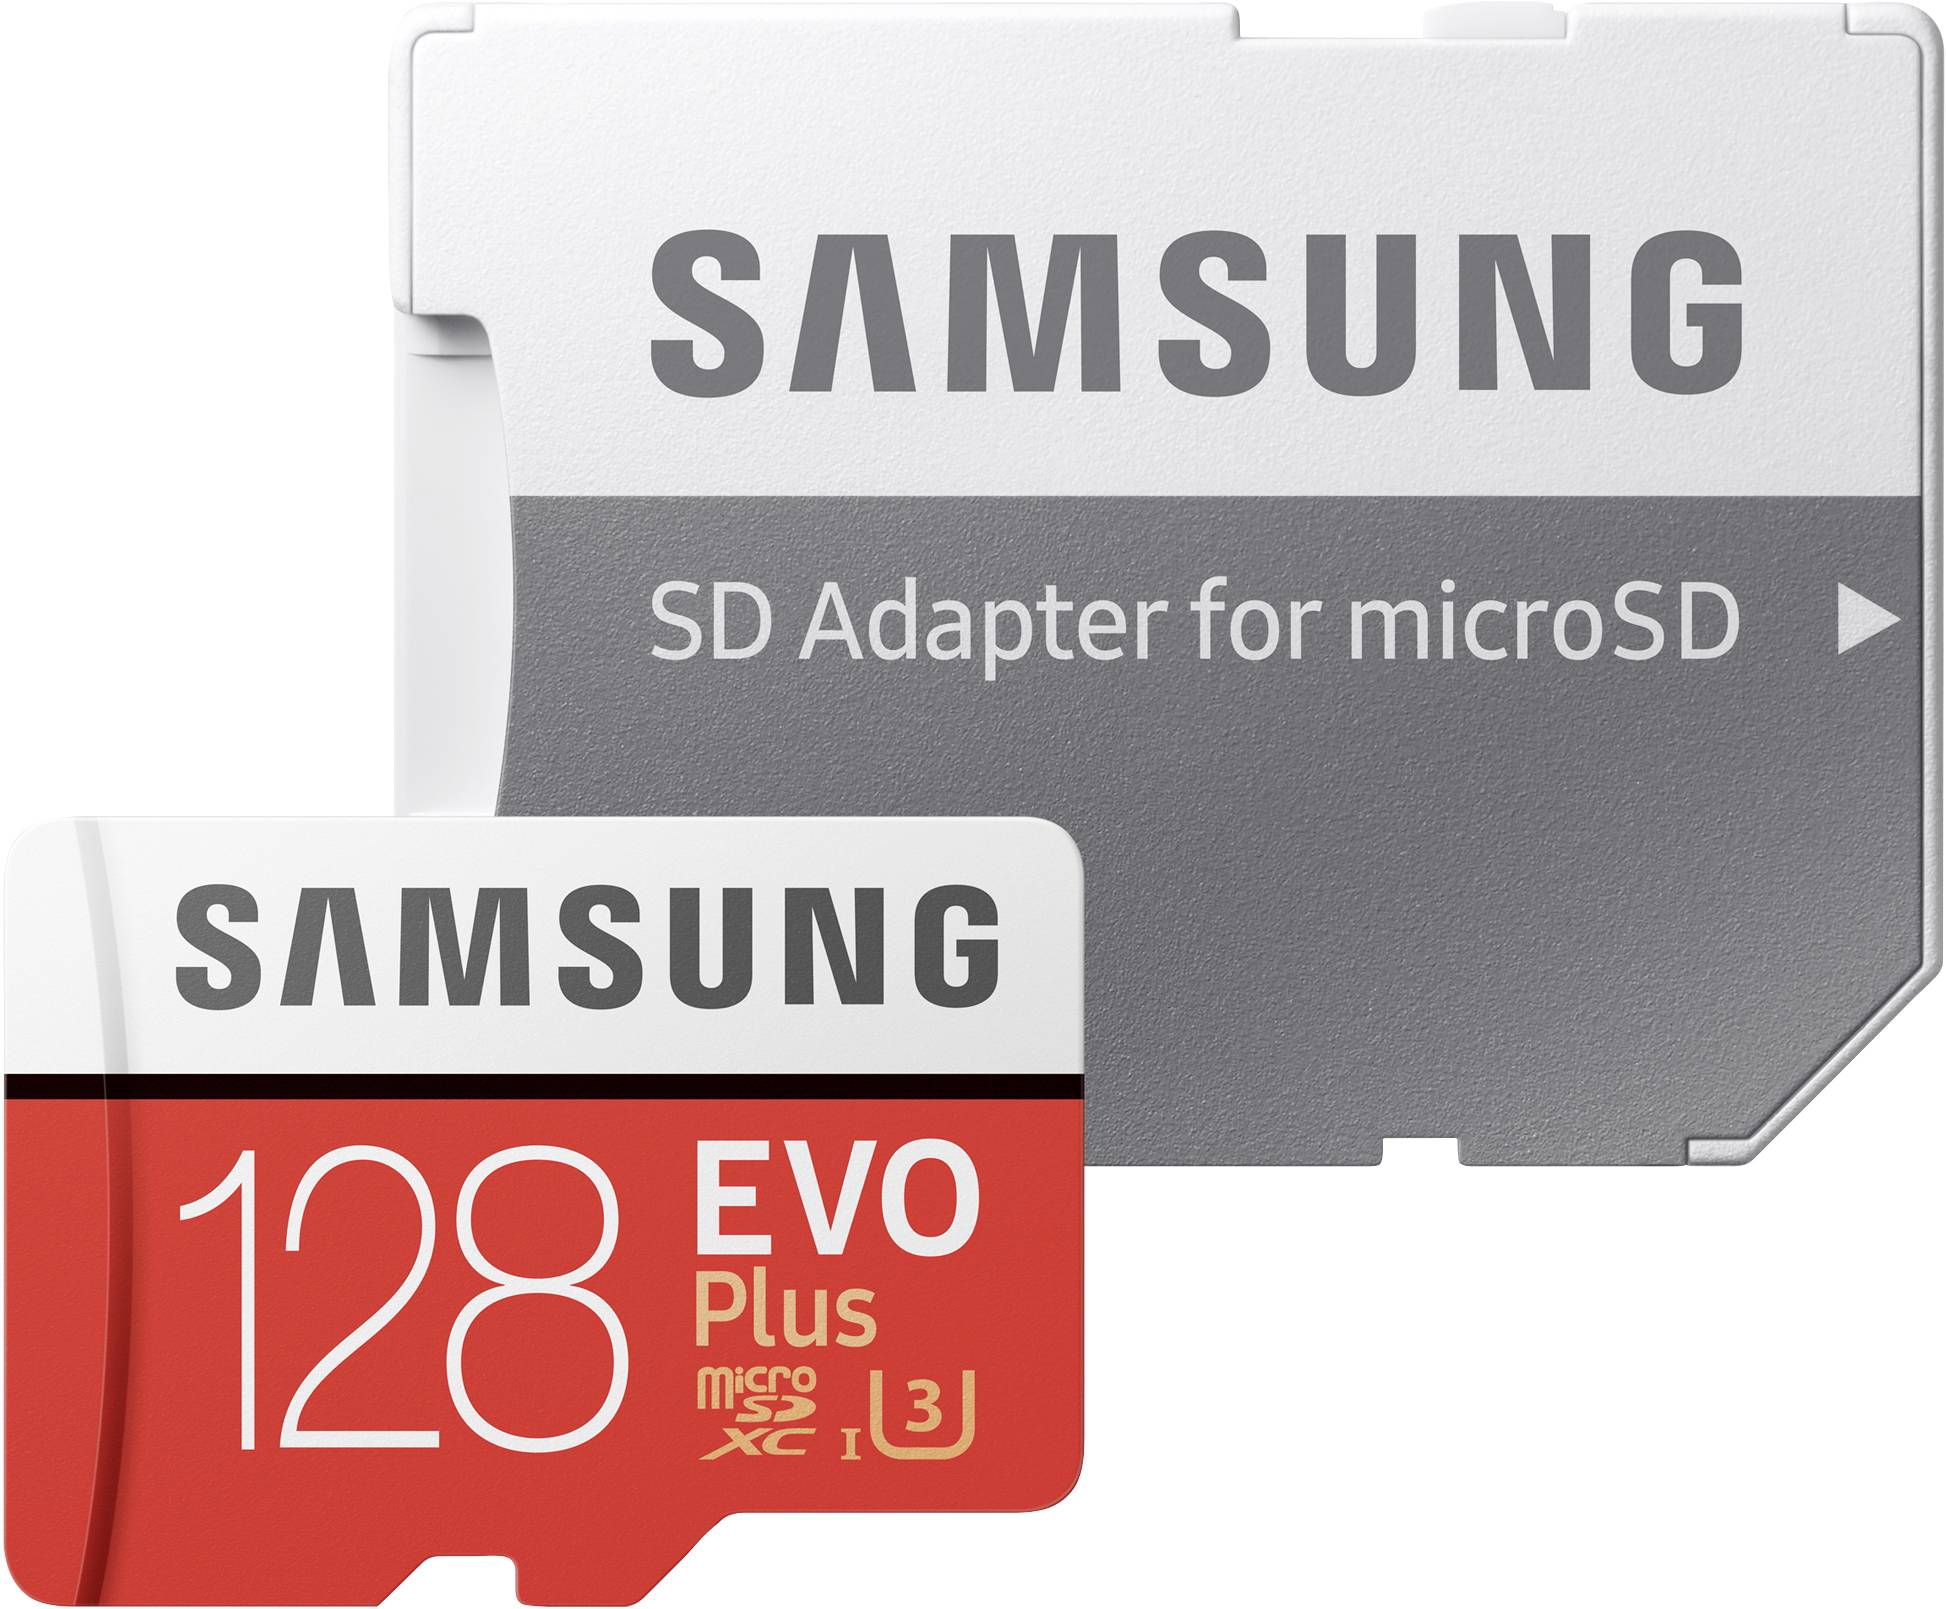 Speicherkarte Samsung EVO Plus 128 GB Micro SD XC microSD Karte UHS-3 Class 10 